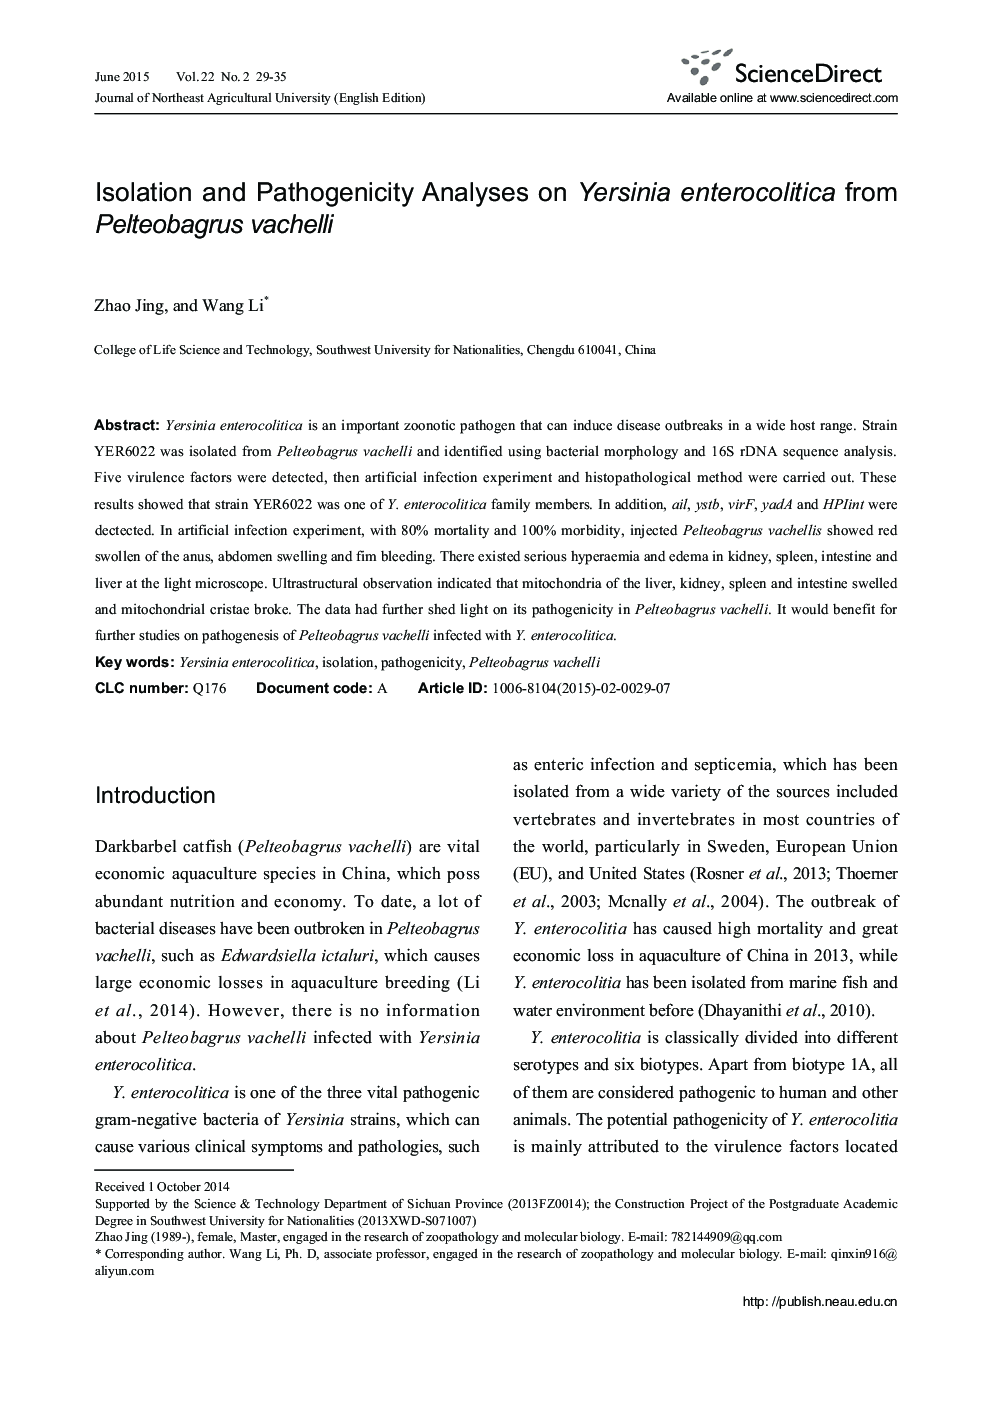 Isolation and Pathogenicity Analyses on Yersinia enterocolitica from Pelteobagrus vachelli 